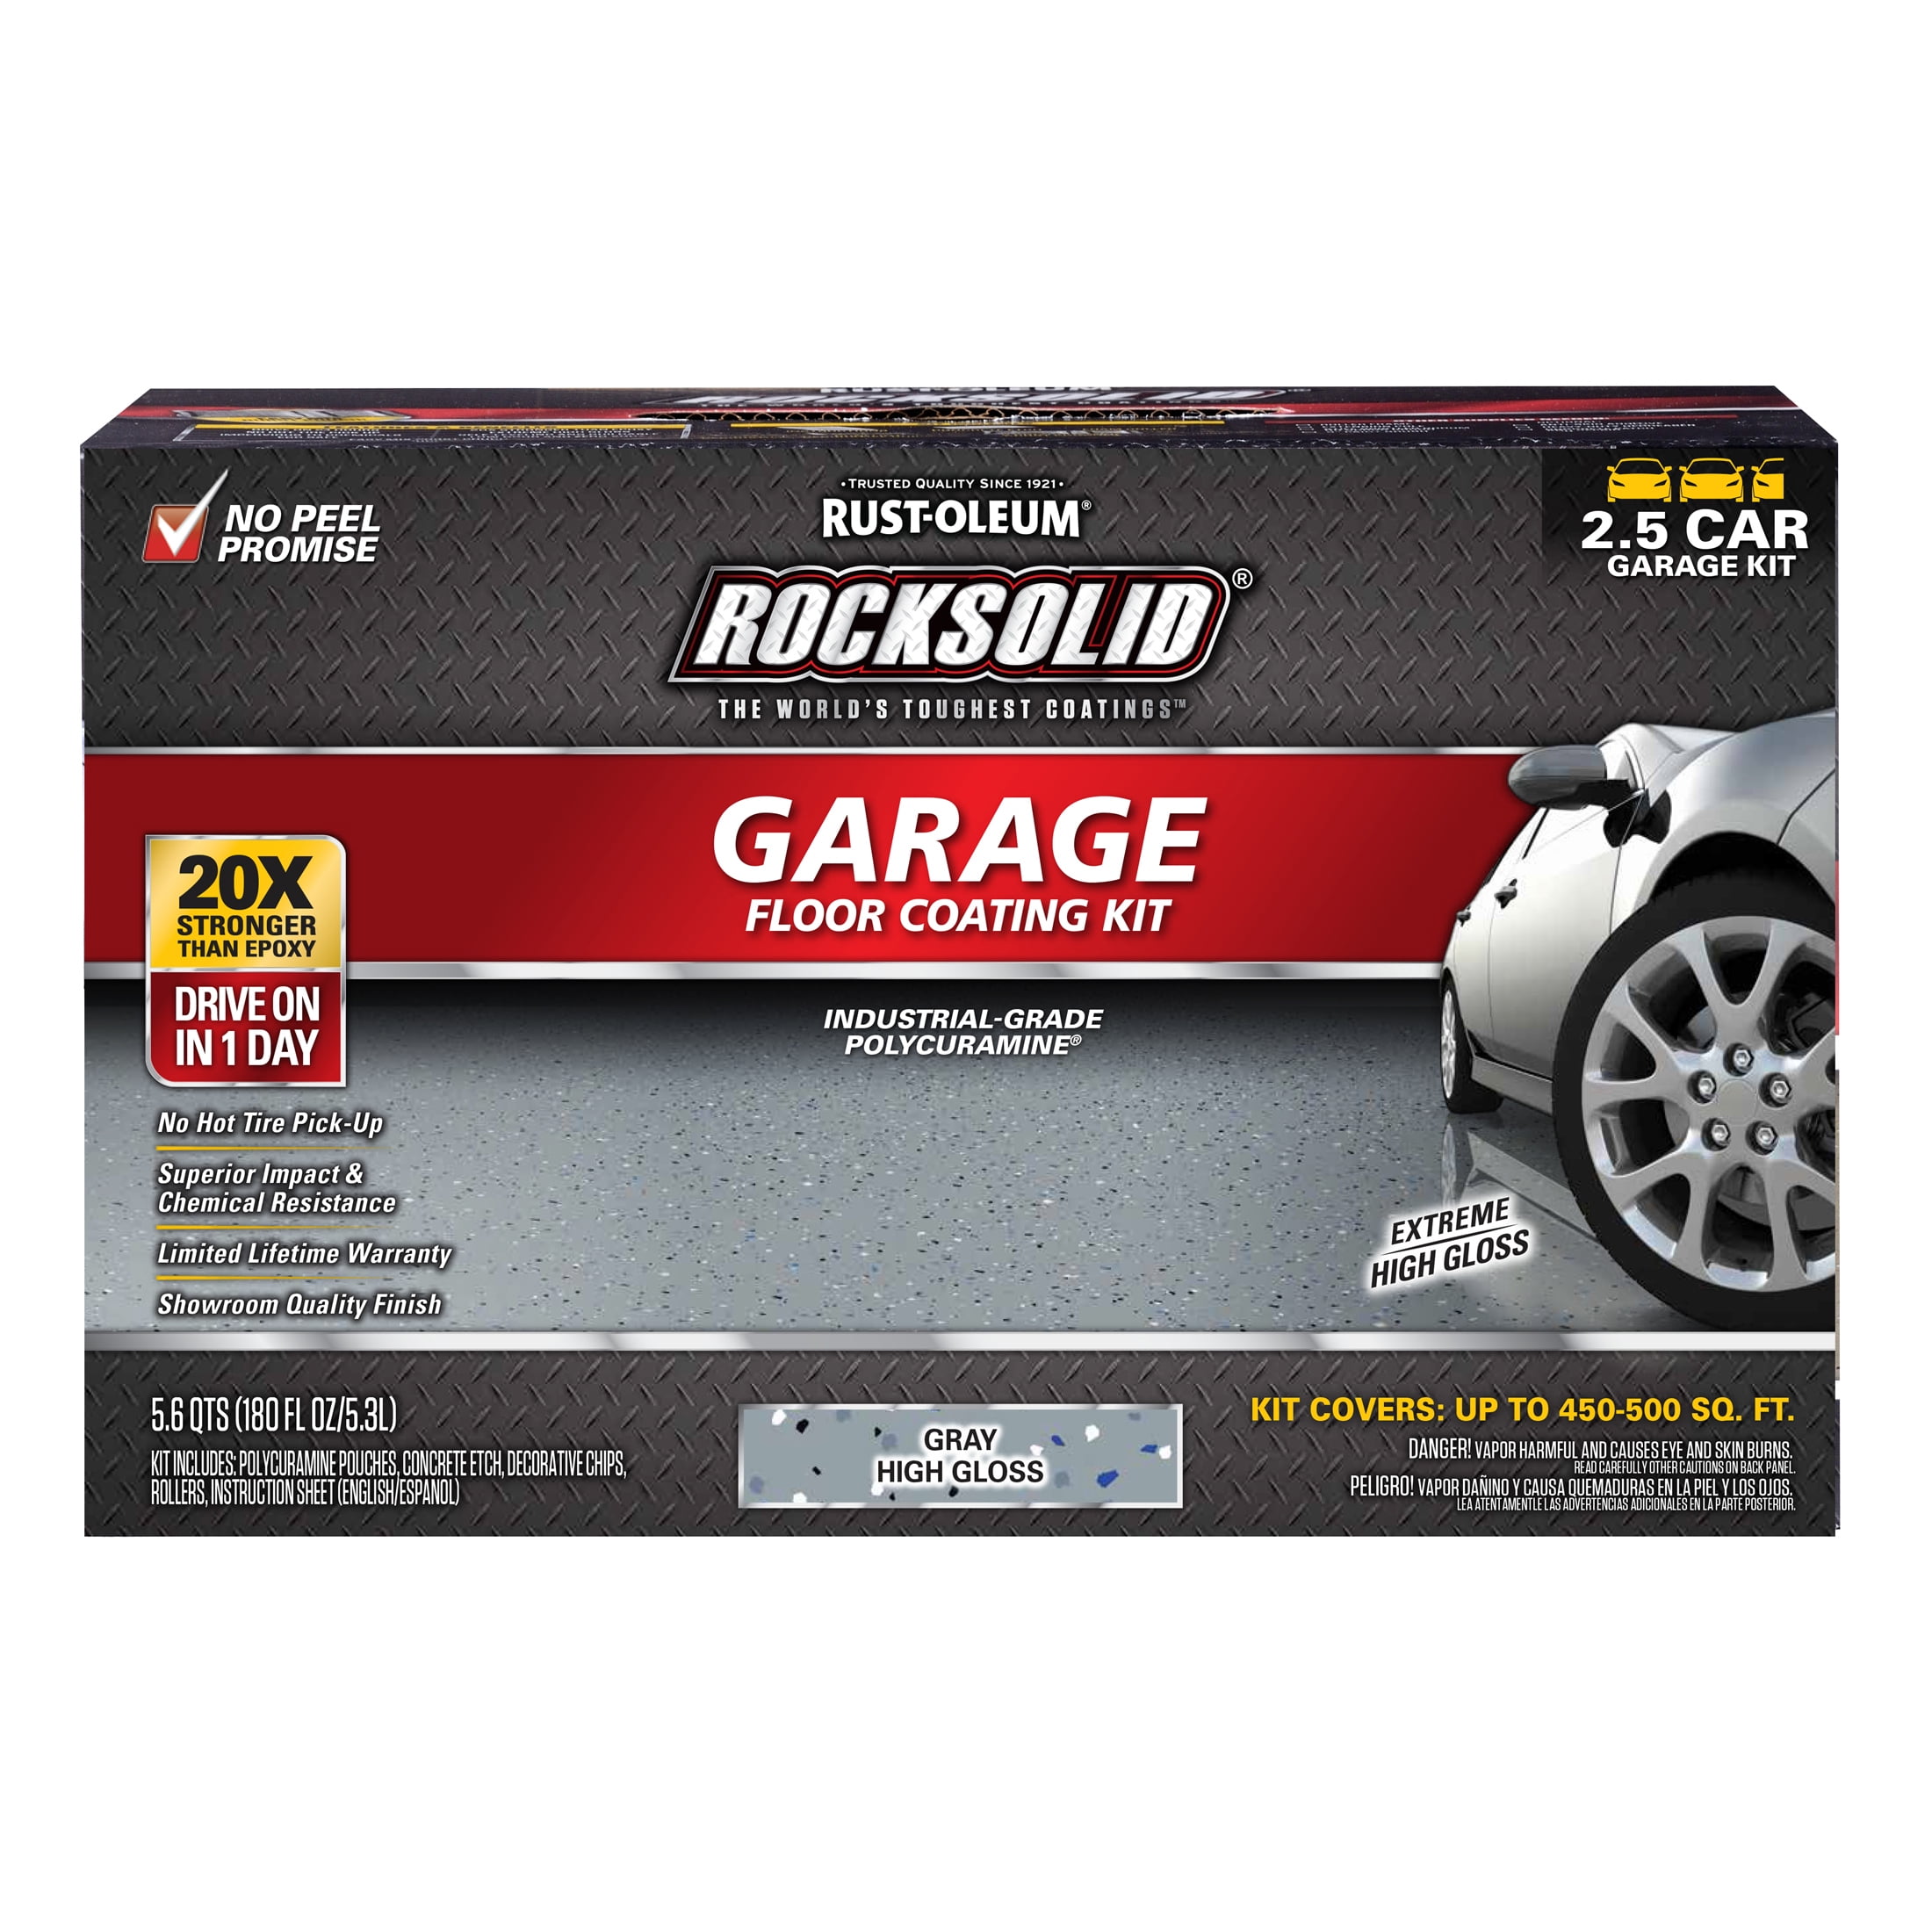 Dark Gray, Rust-Oleum RockSolid Garage Floor Coating Kit-317284, High Gloss  2.5-Car,180 oz Kit, 1 Pack